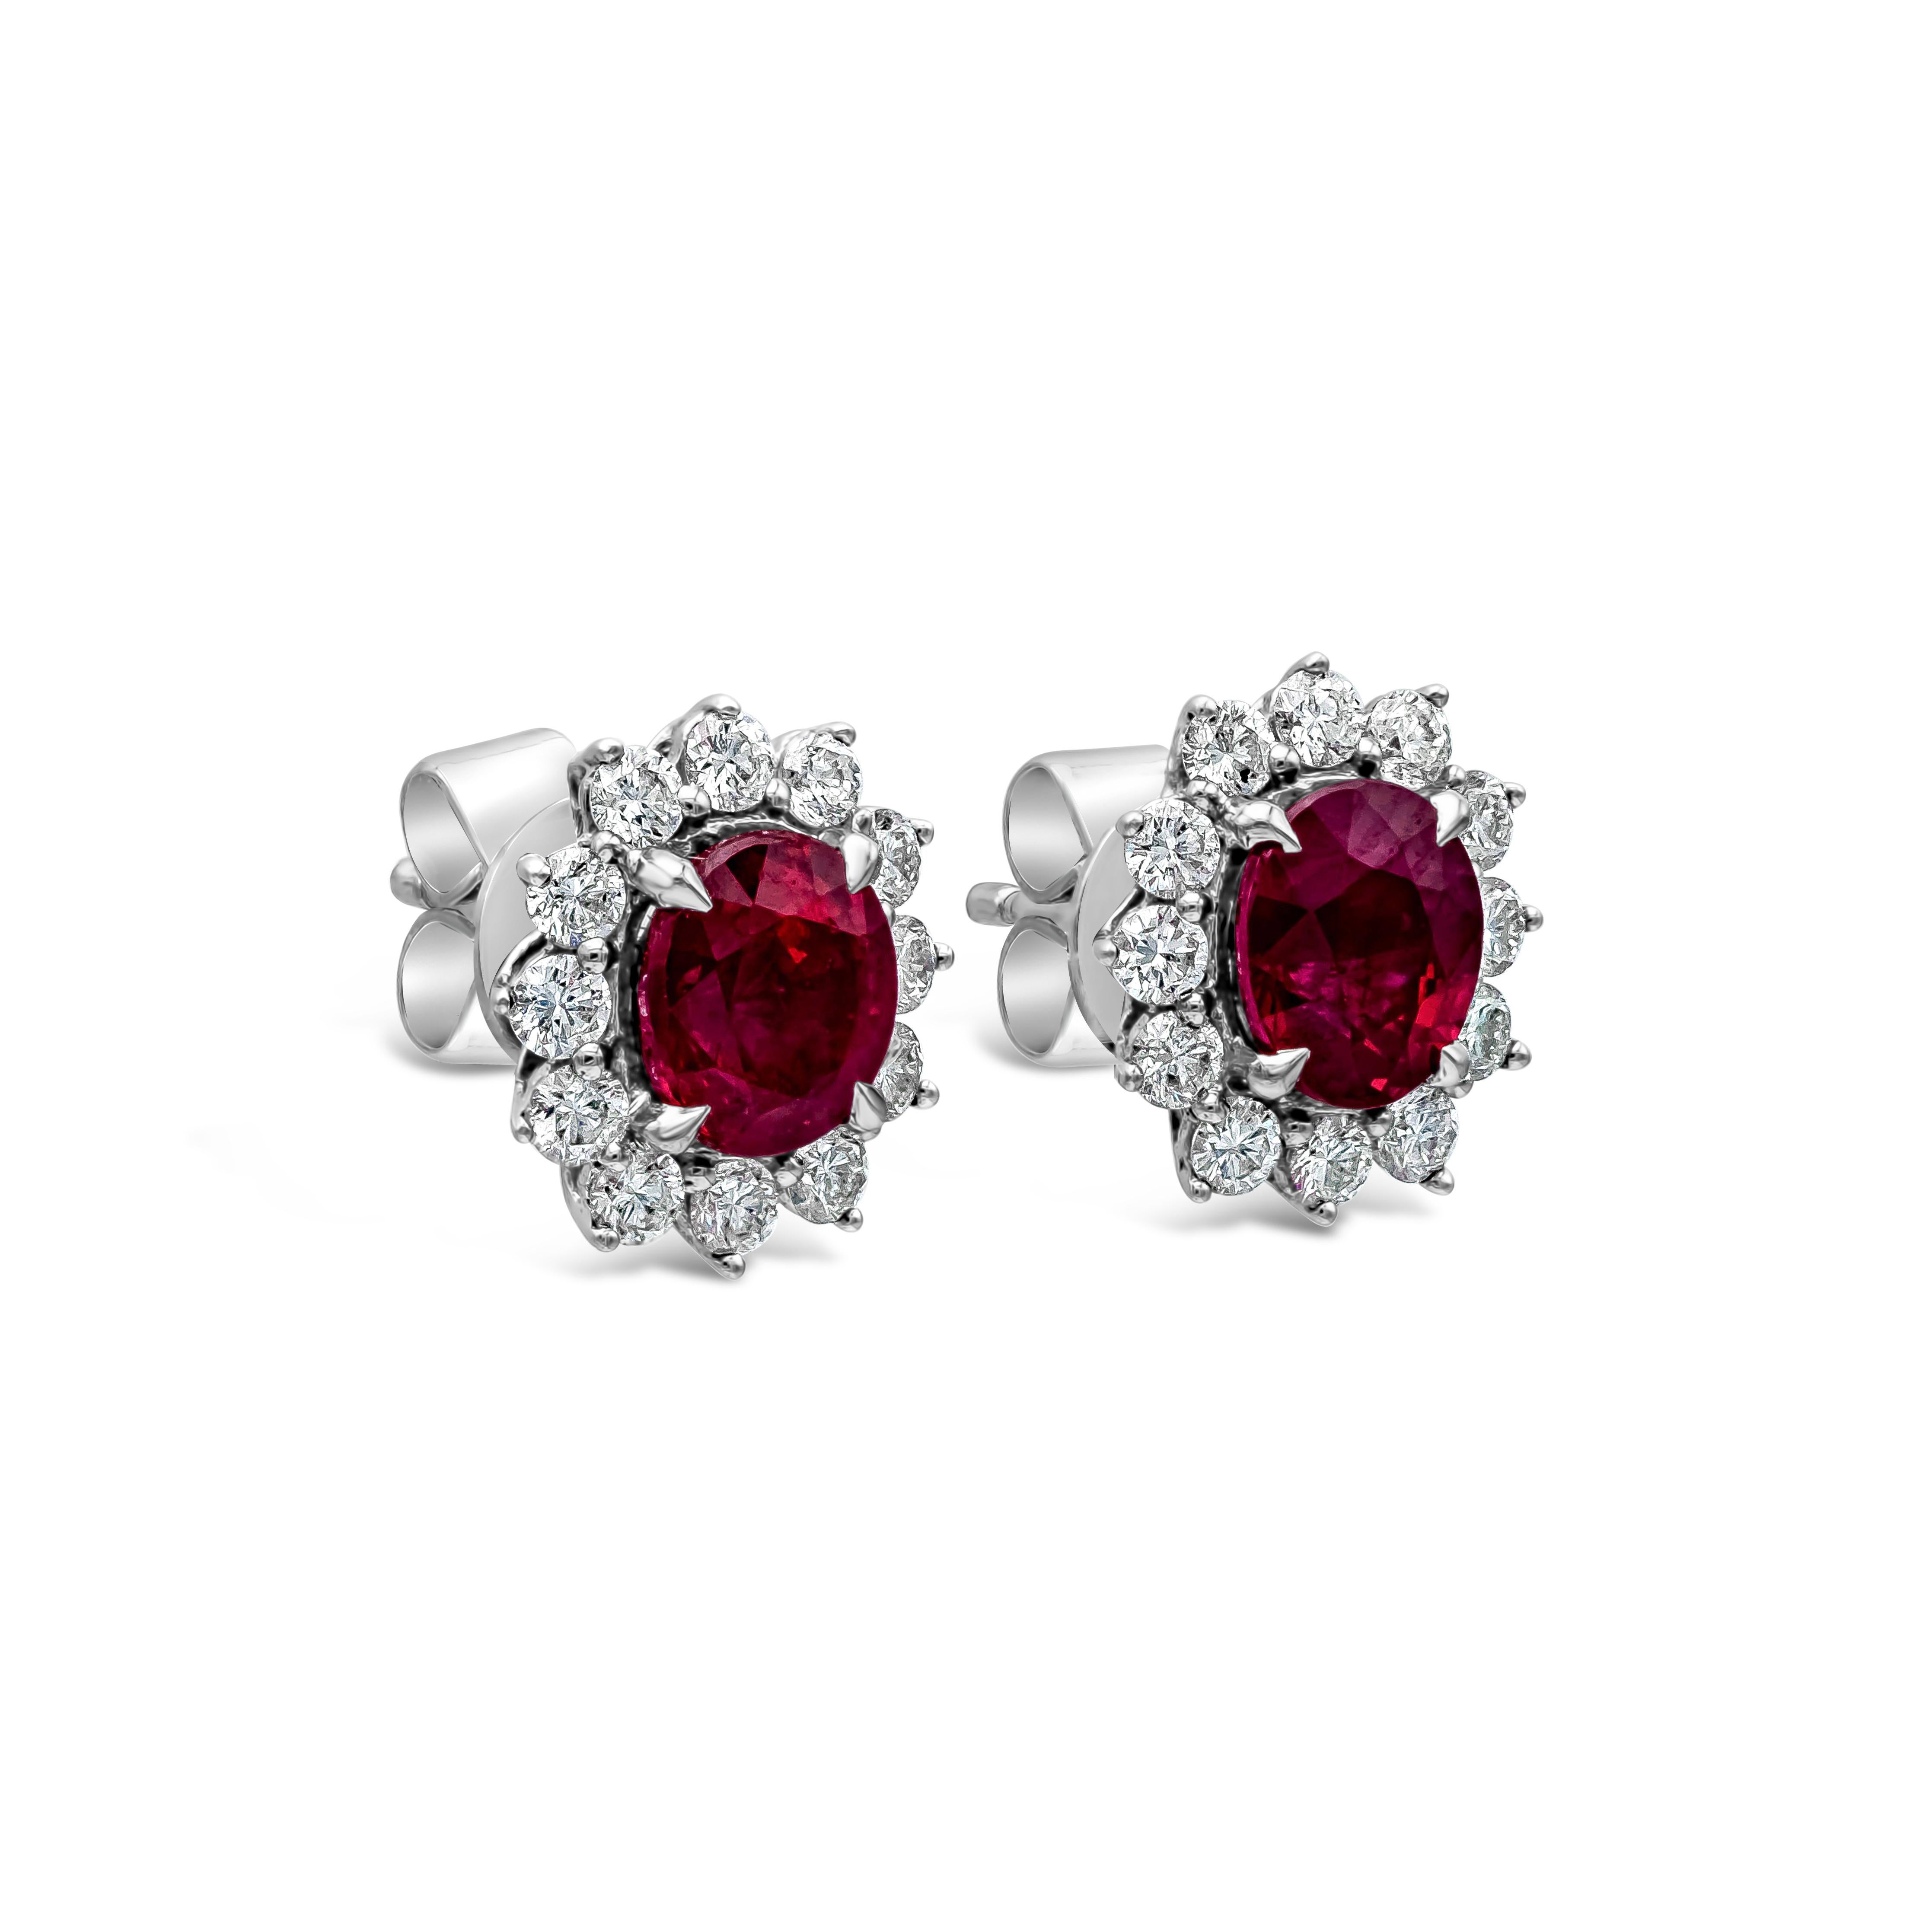 Contemporary Roman Malakov 2.09 Carat Oval Cut Ruby And Diamond Halo Stud Earrings For Sale